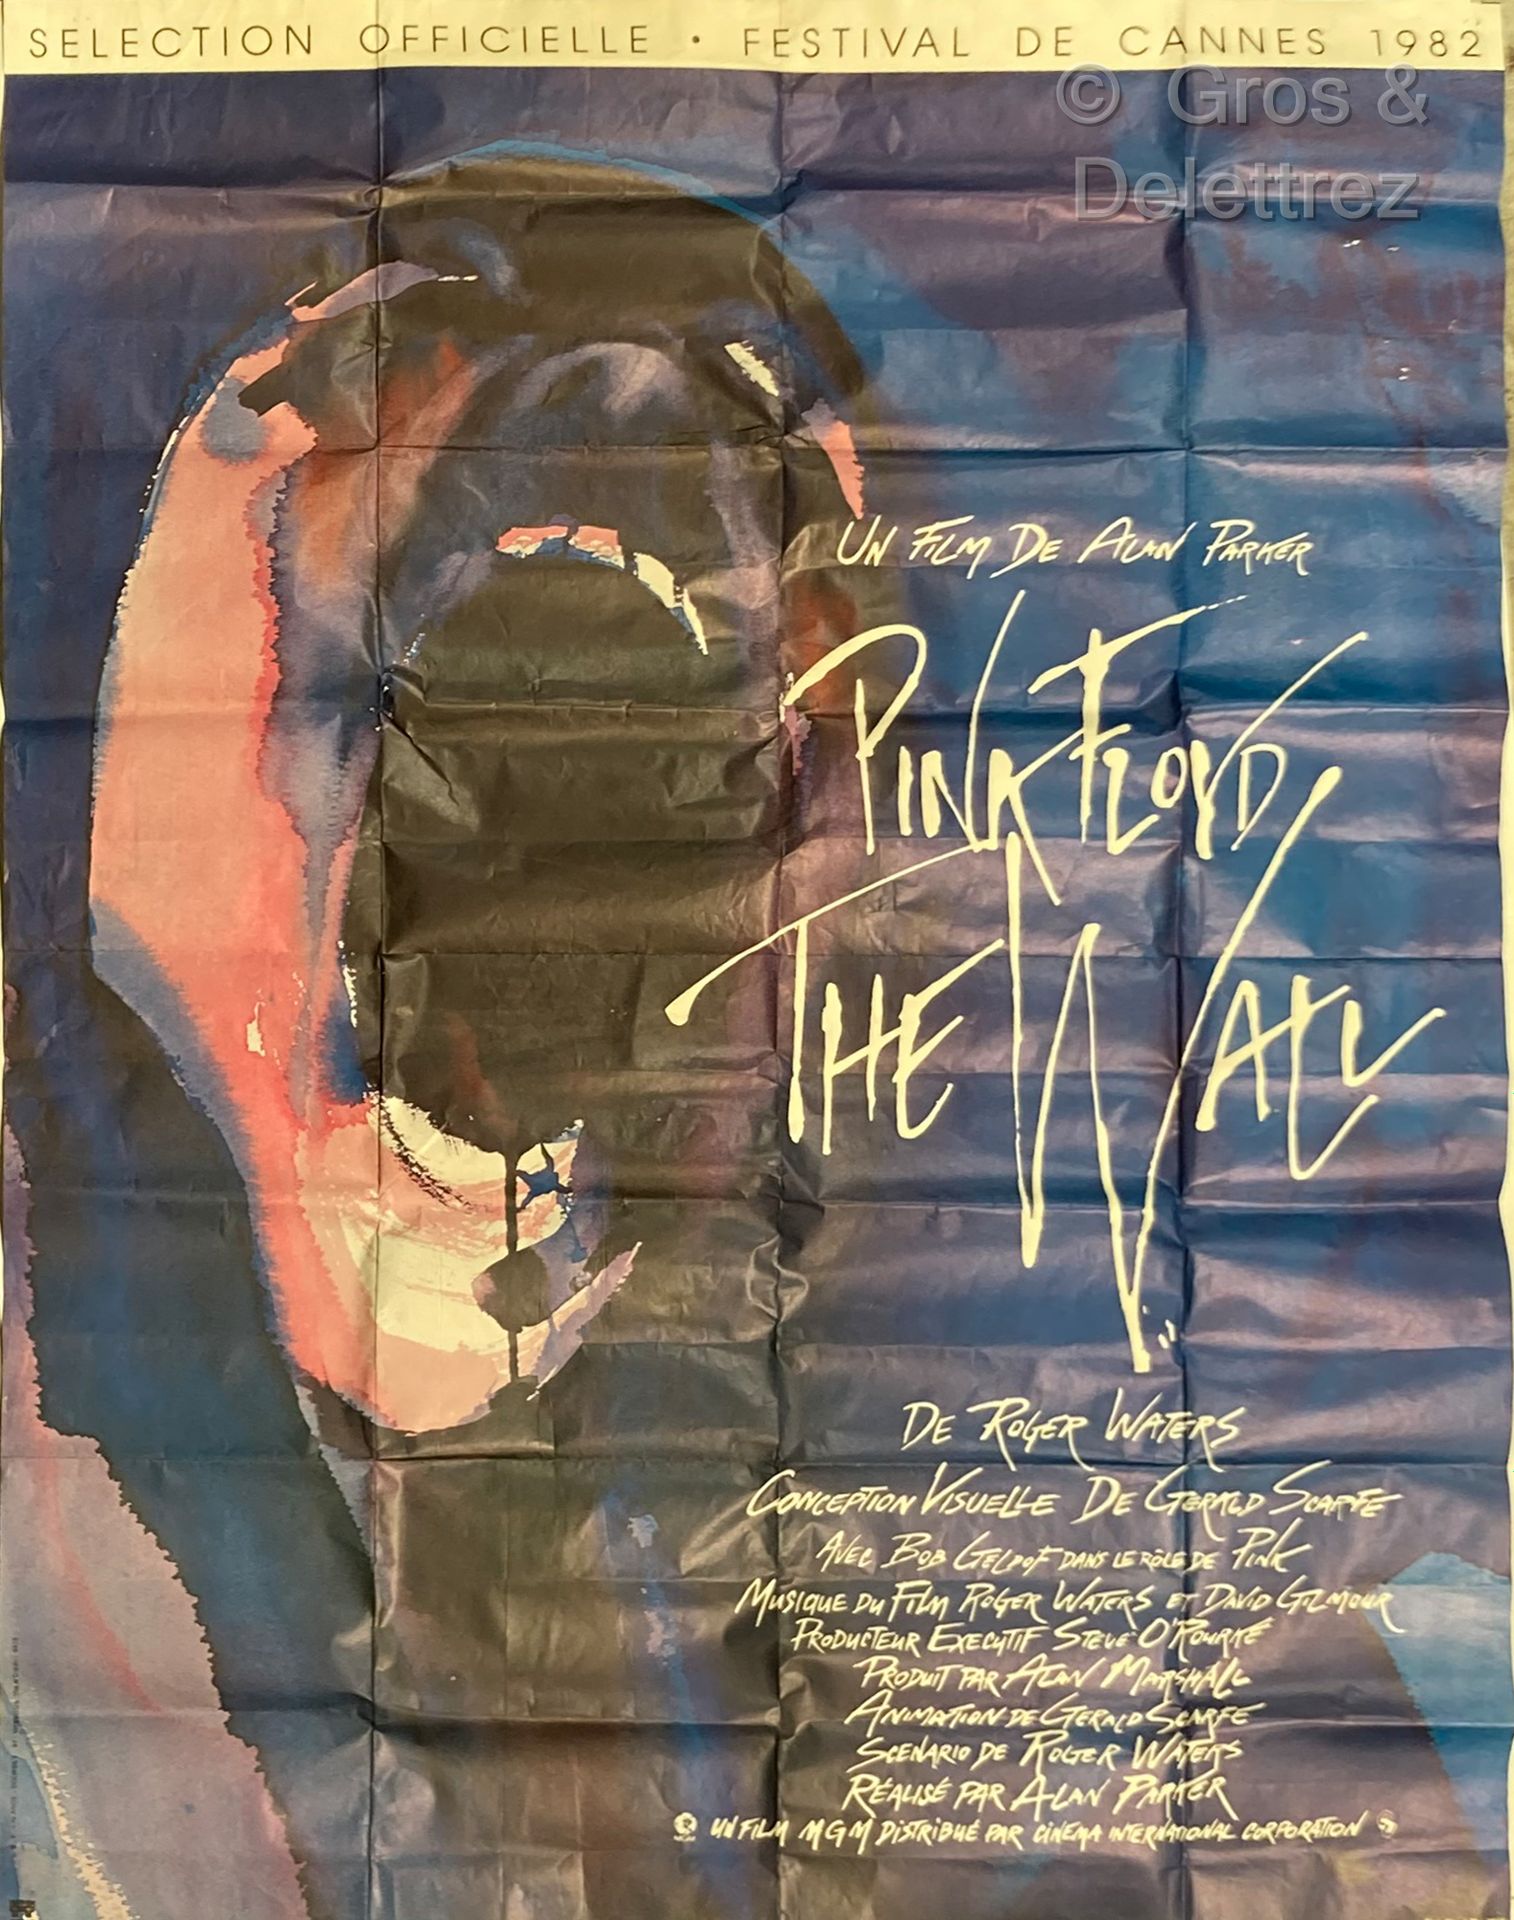 Roger Waters 粉红女郎之墙

电影海报

155 x 116 cm 小事故